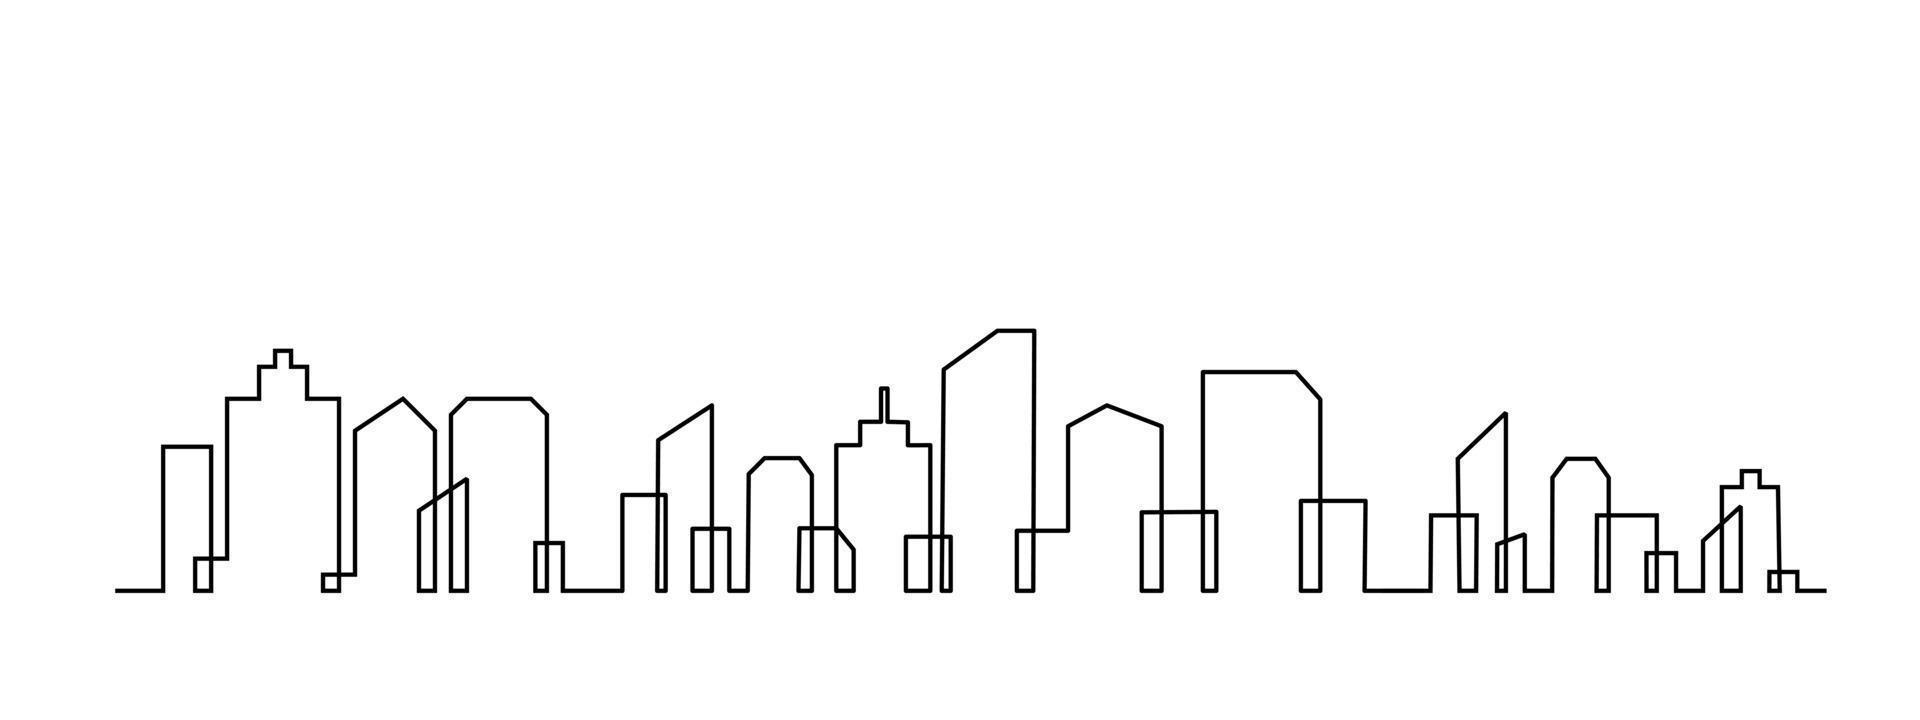 city skyline vector illustration design